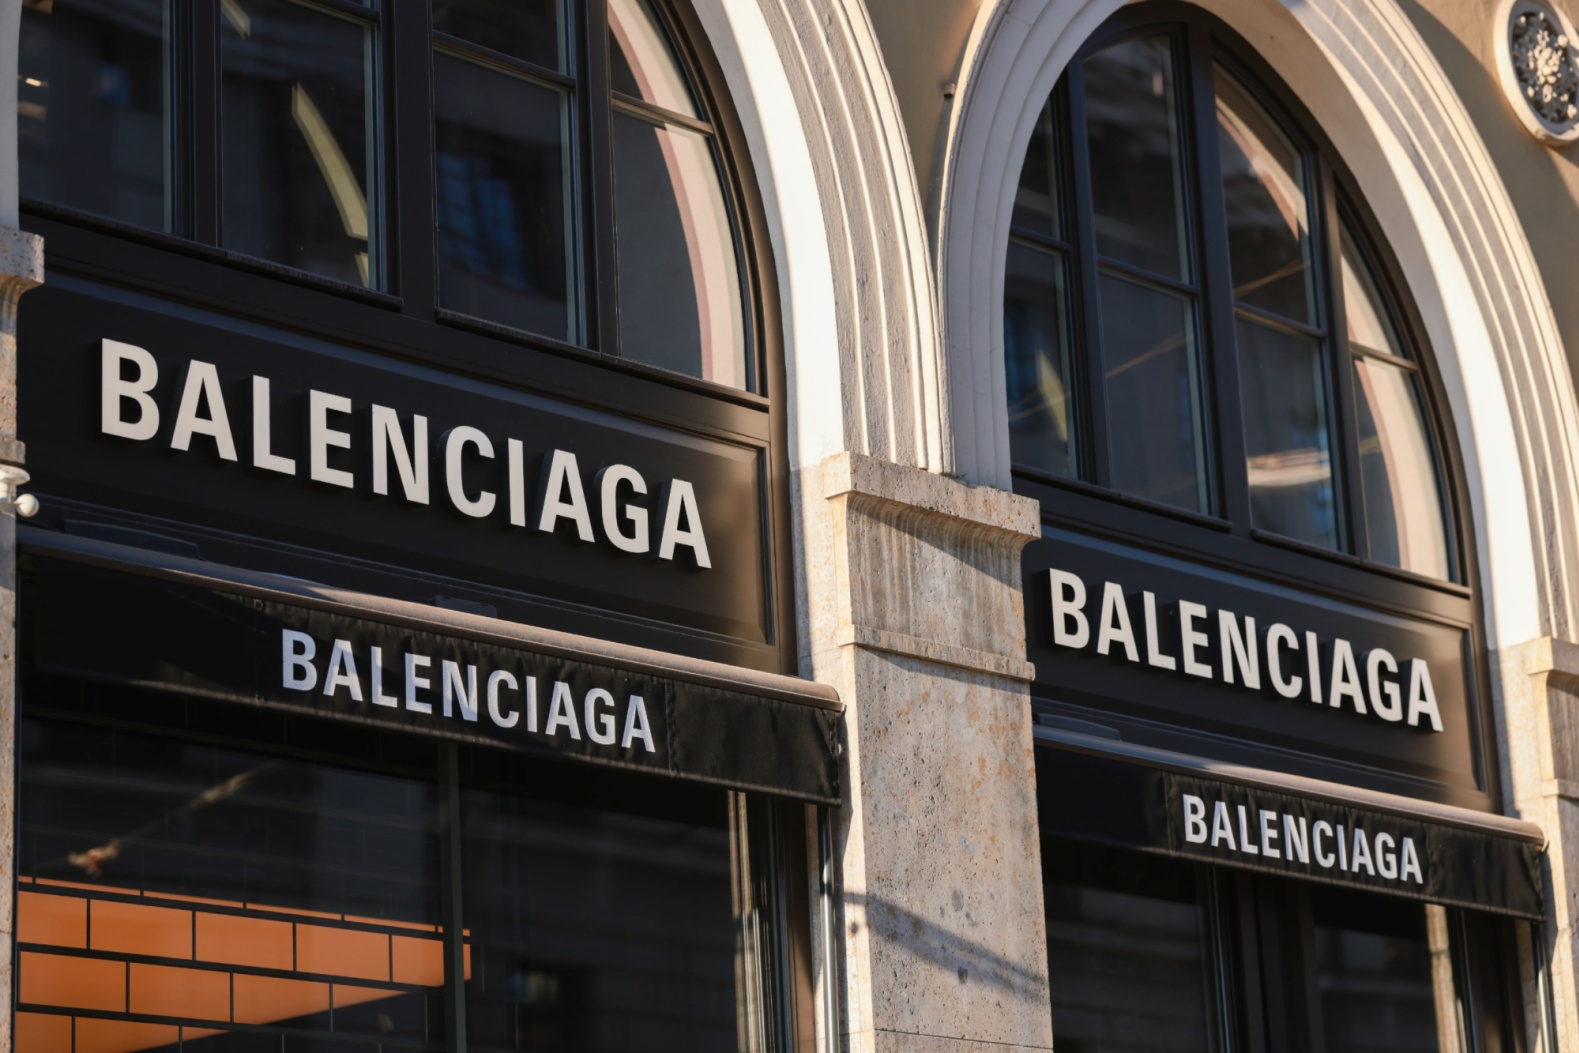 30 Previously Unseen Balenciaga Designs on Display This Week